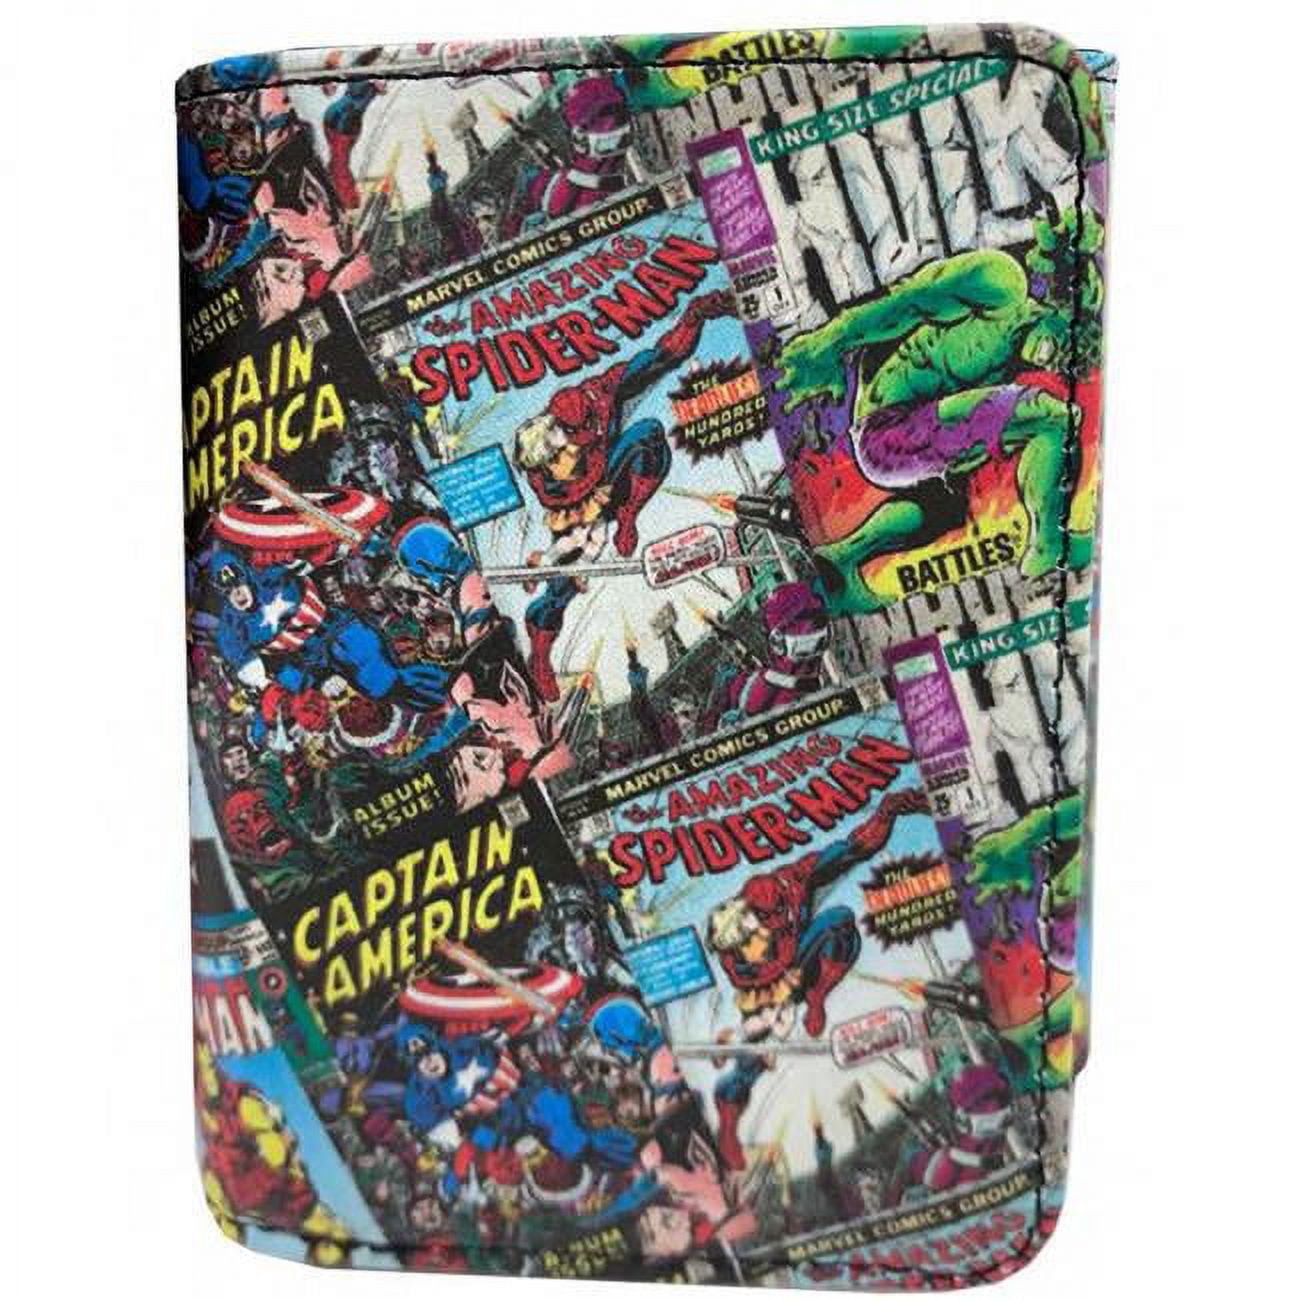 New Marvel Comics bags from Disney - Disney Diary